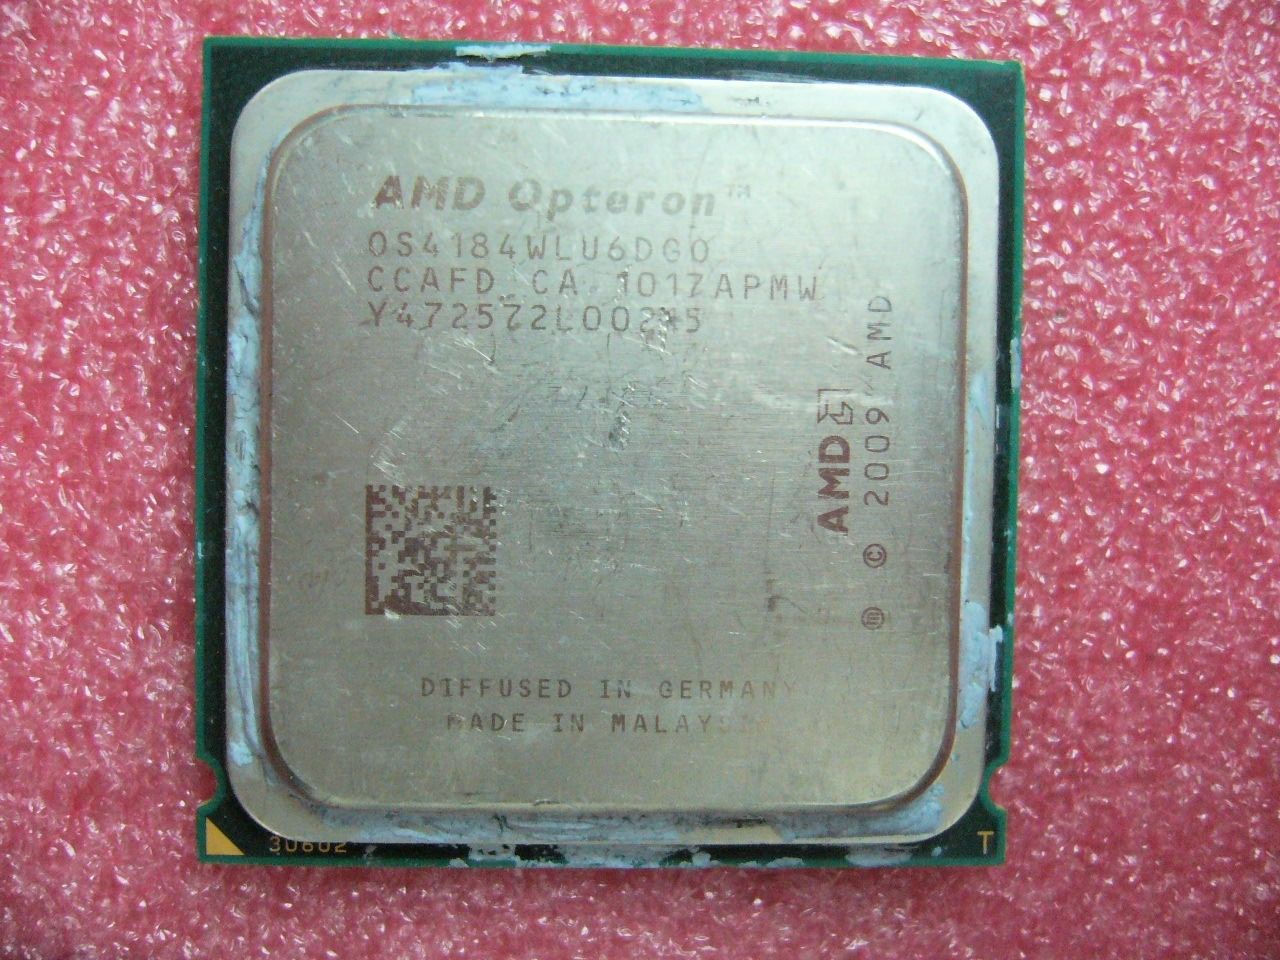 QTY 1x AMD Opteron 4184 2.8 GHz Six Core (OS4184WLU6DGO) CPU Socket C32